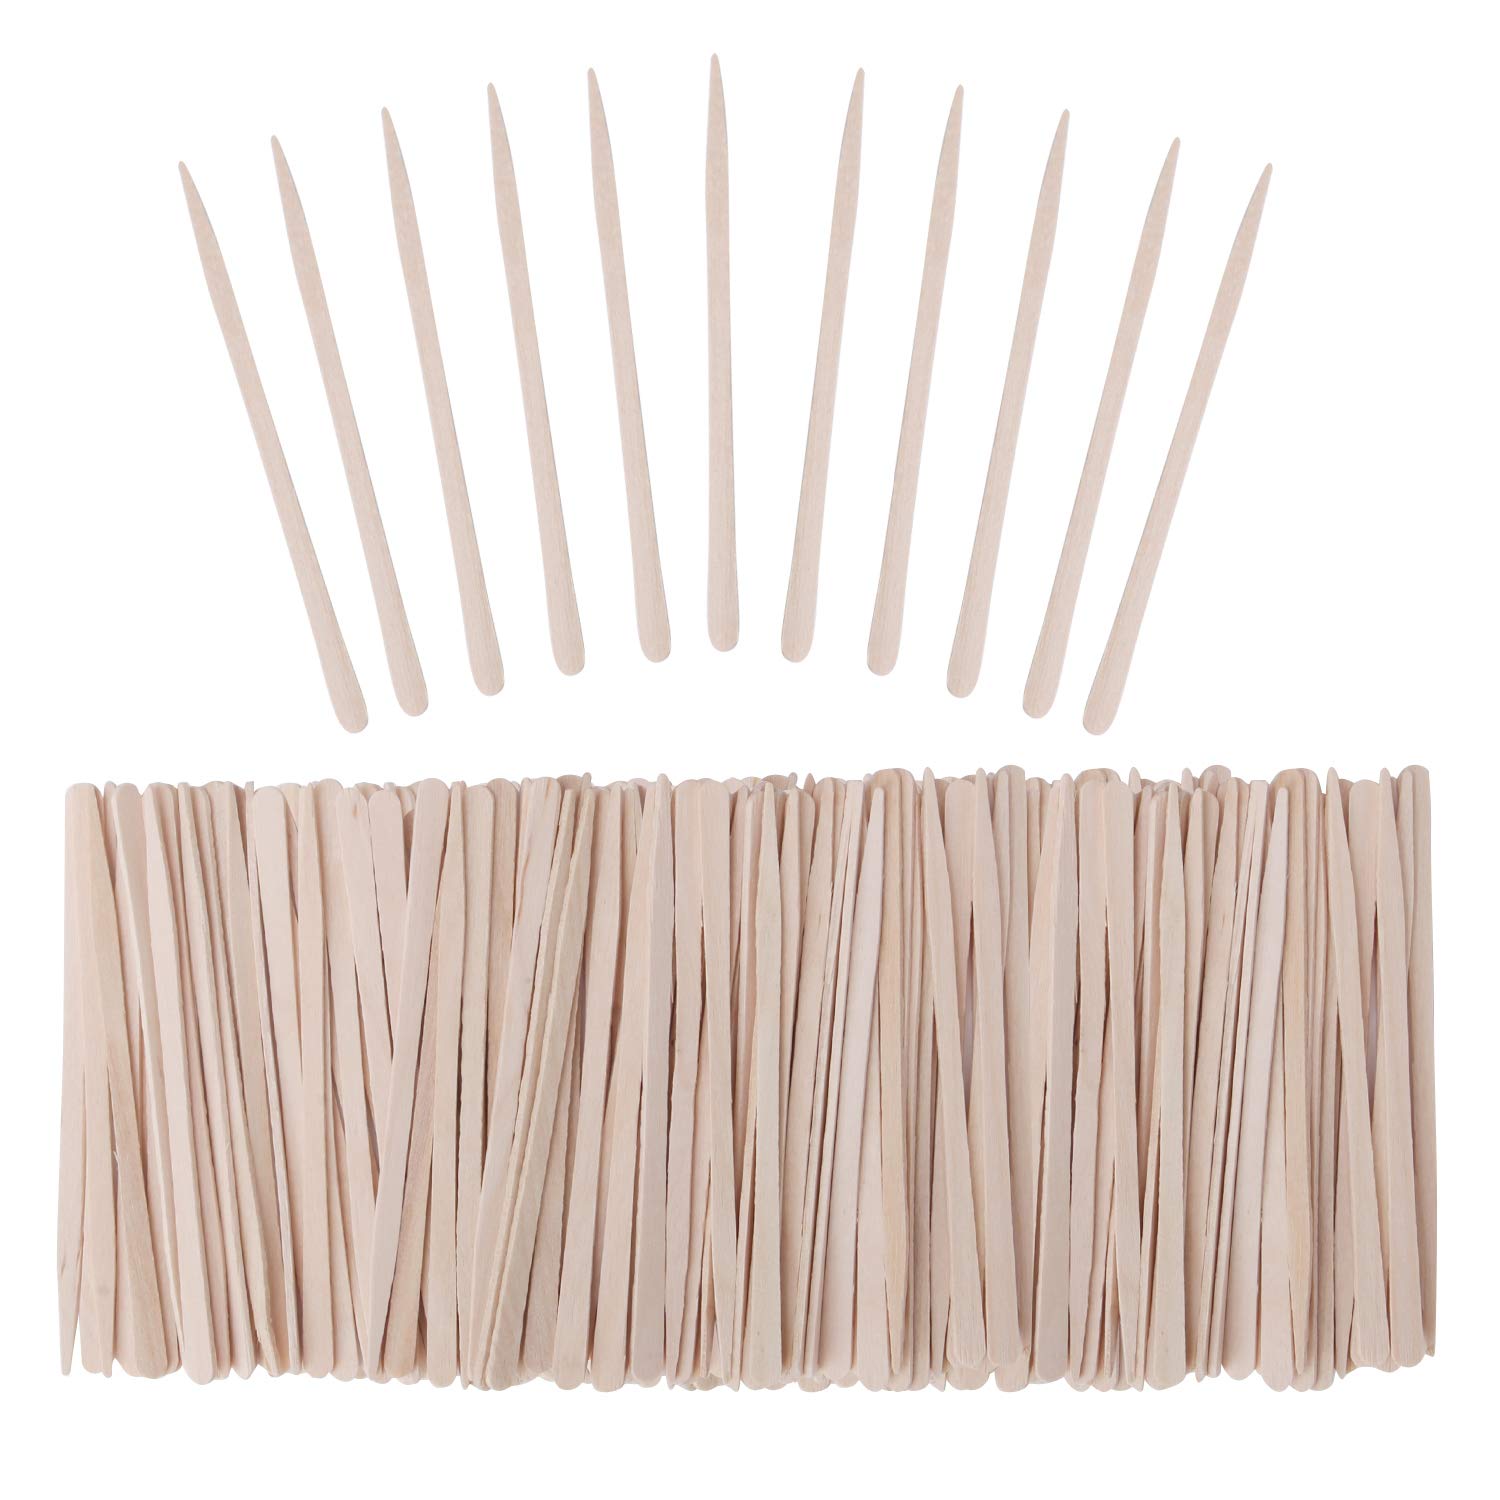 Senkary 600 Pieces Small Waxing Sticks Wooden Wax Sticks Wax Applicator  Sticks Wood Wax Spatulas for